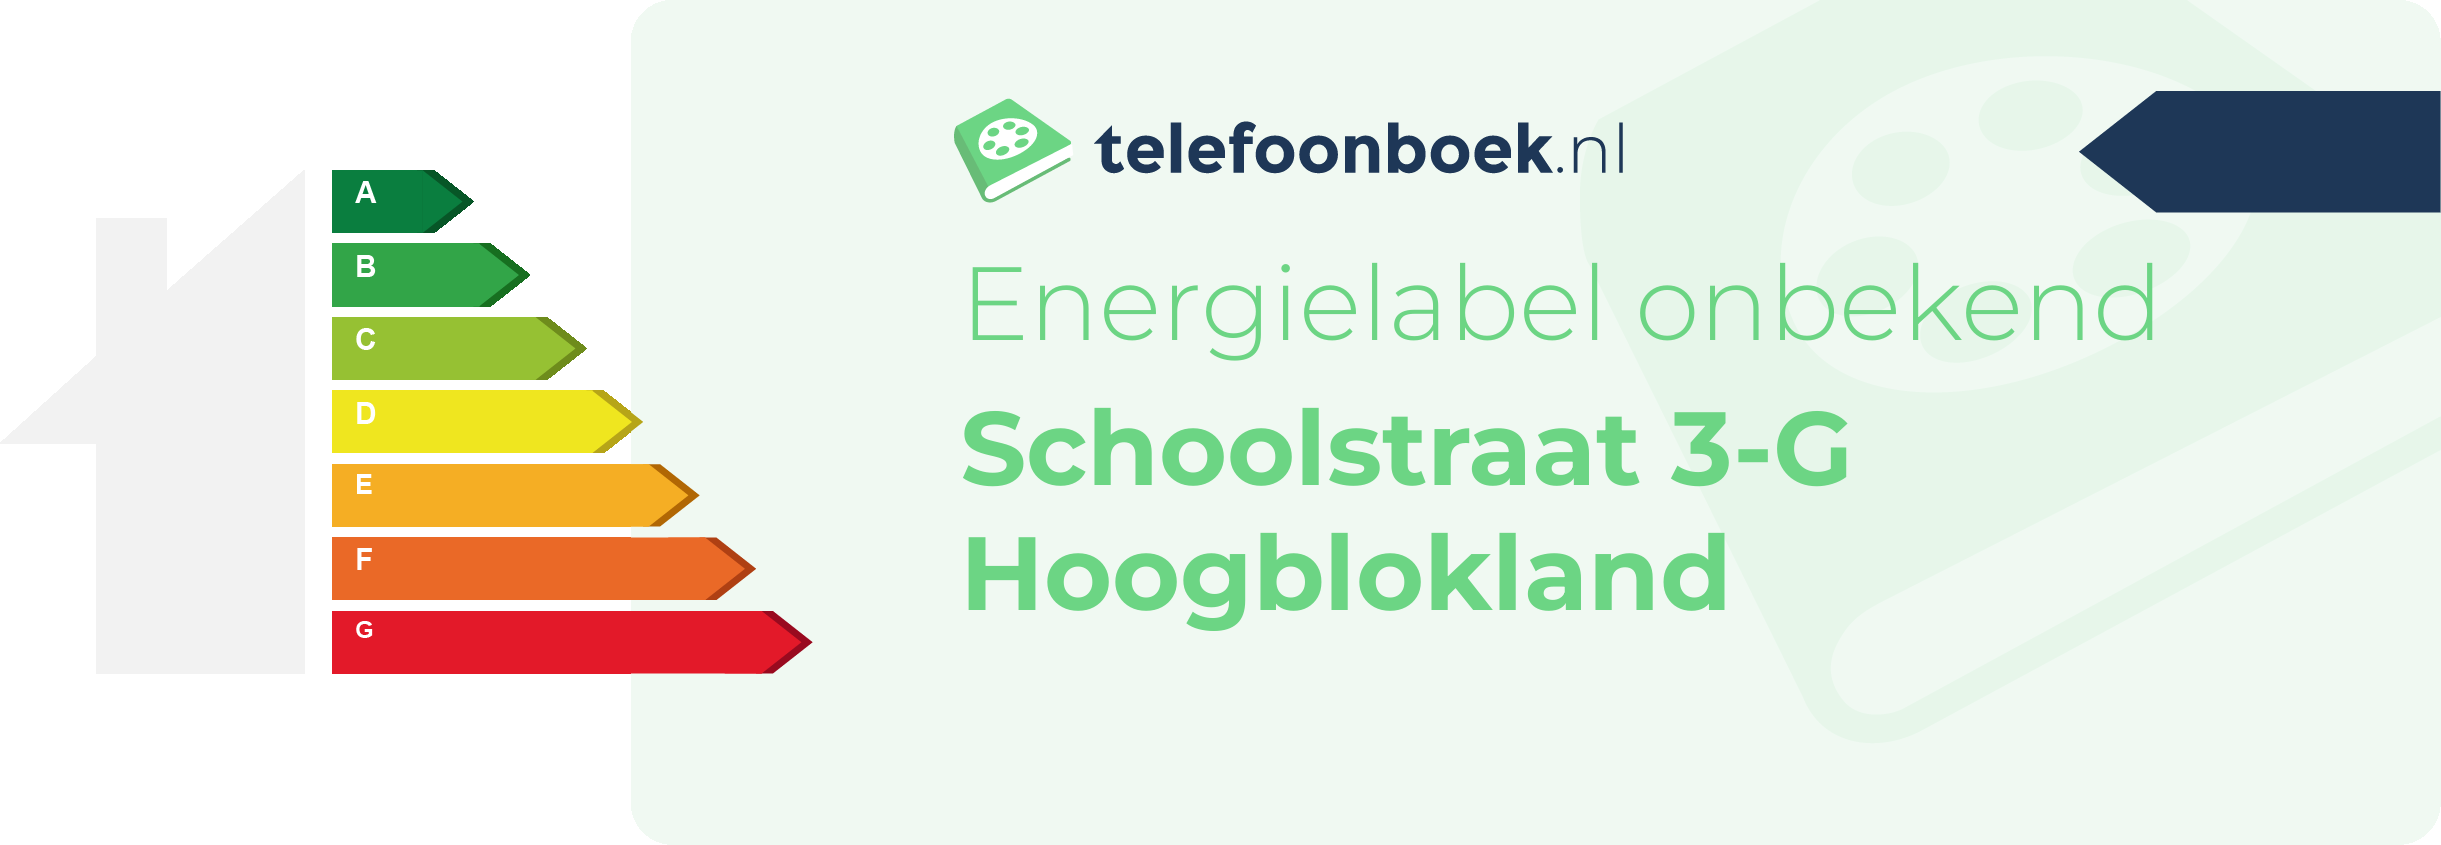 Energielabel Schoolstraat 3-G Hoogblokland